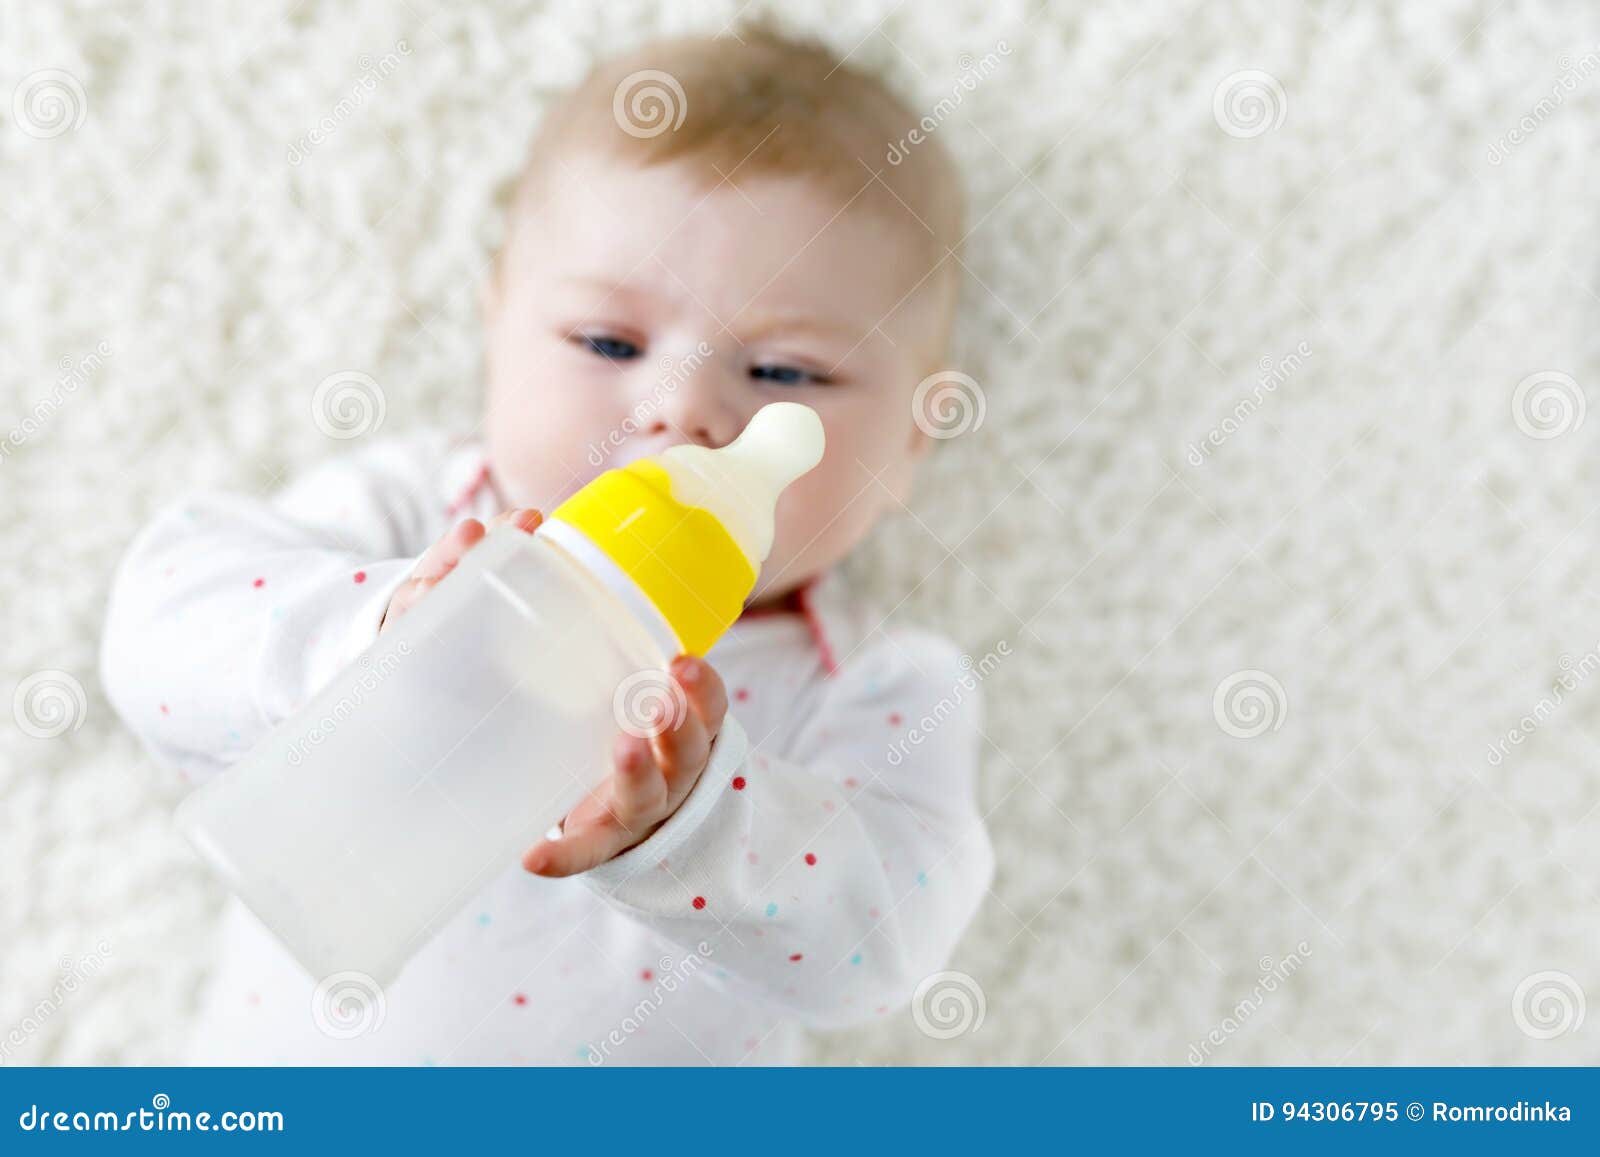 cute adorable ewborn baby girl holding nursing bottle and drinking formula milk